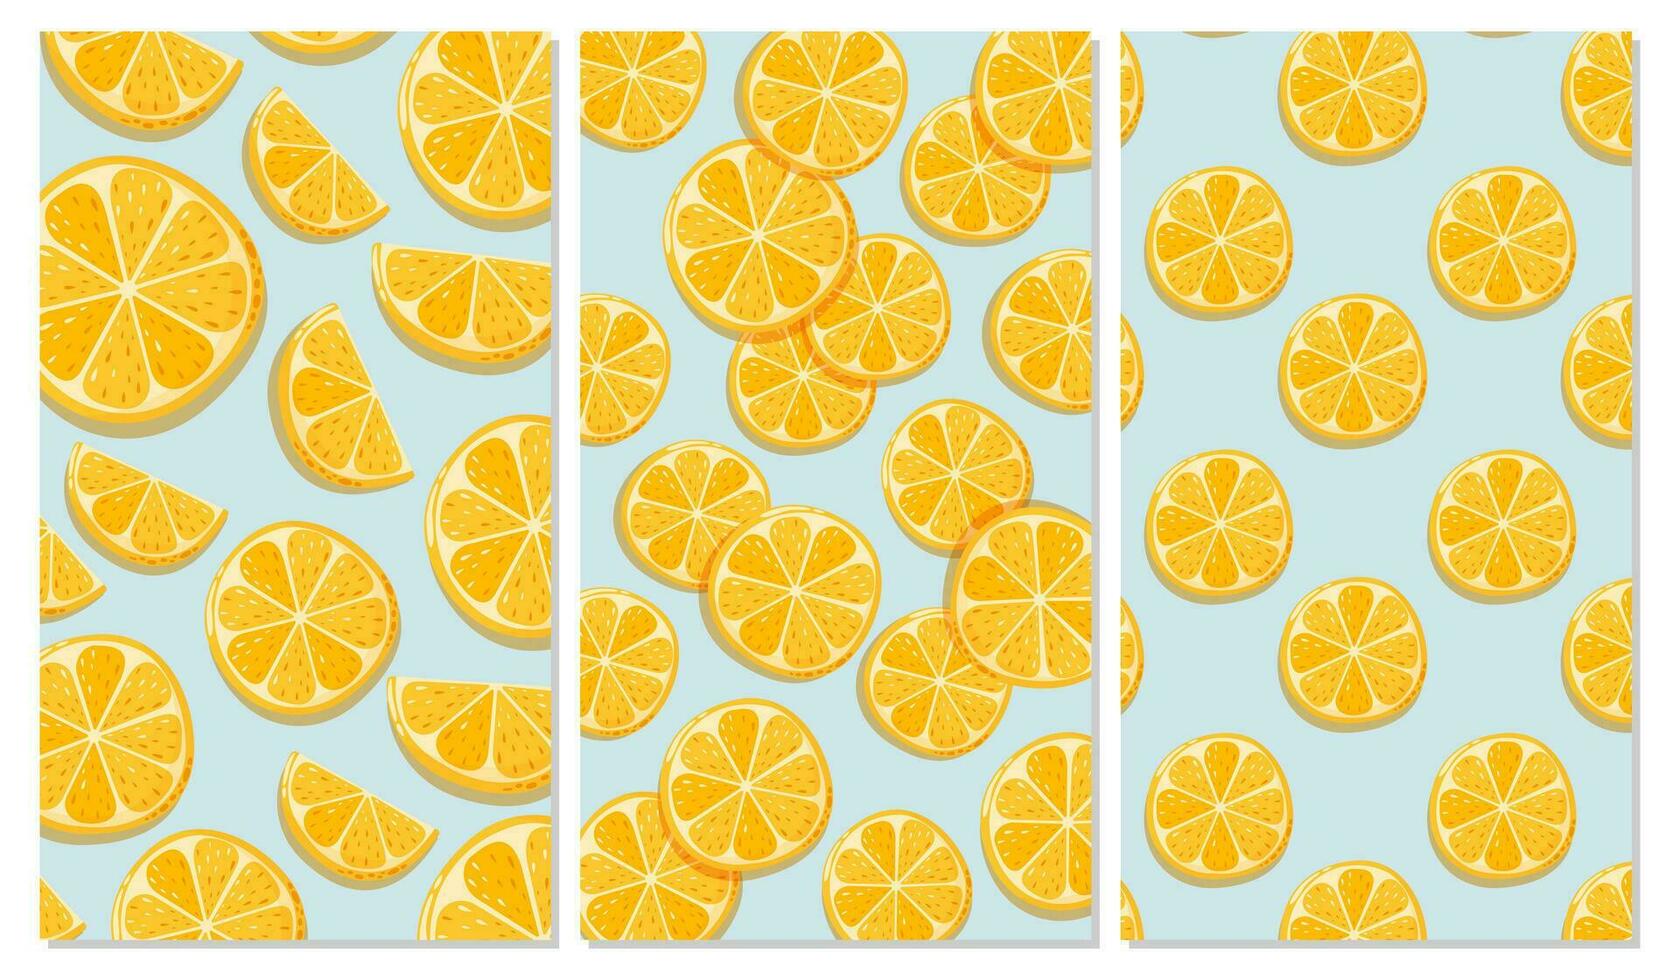 Set of lemon backgrounds. Summer fruit vector illustration in cartoon flat style. For banner, poster, flyer, stories